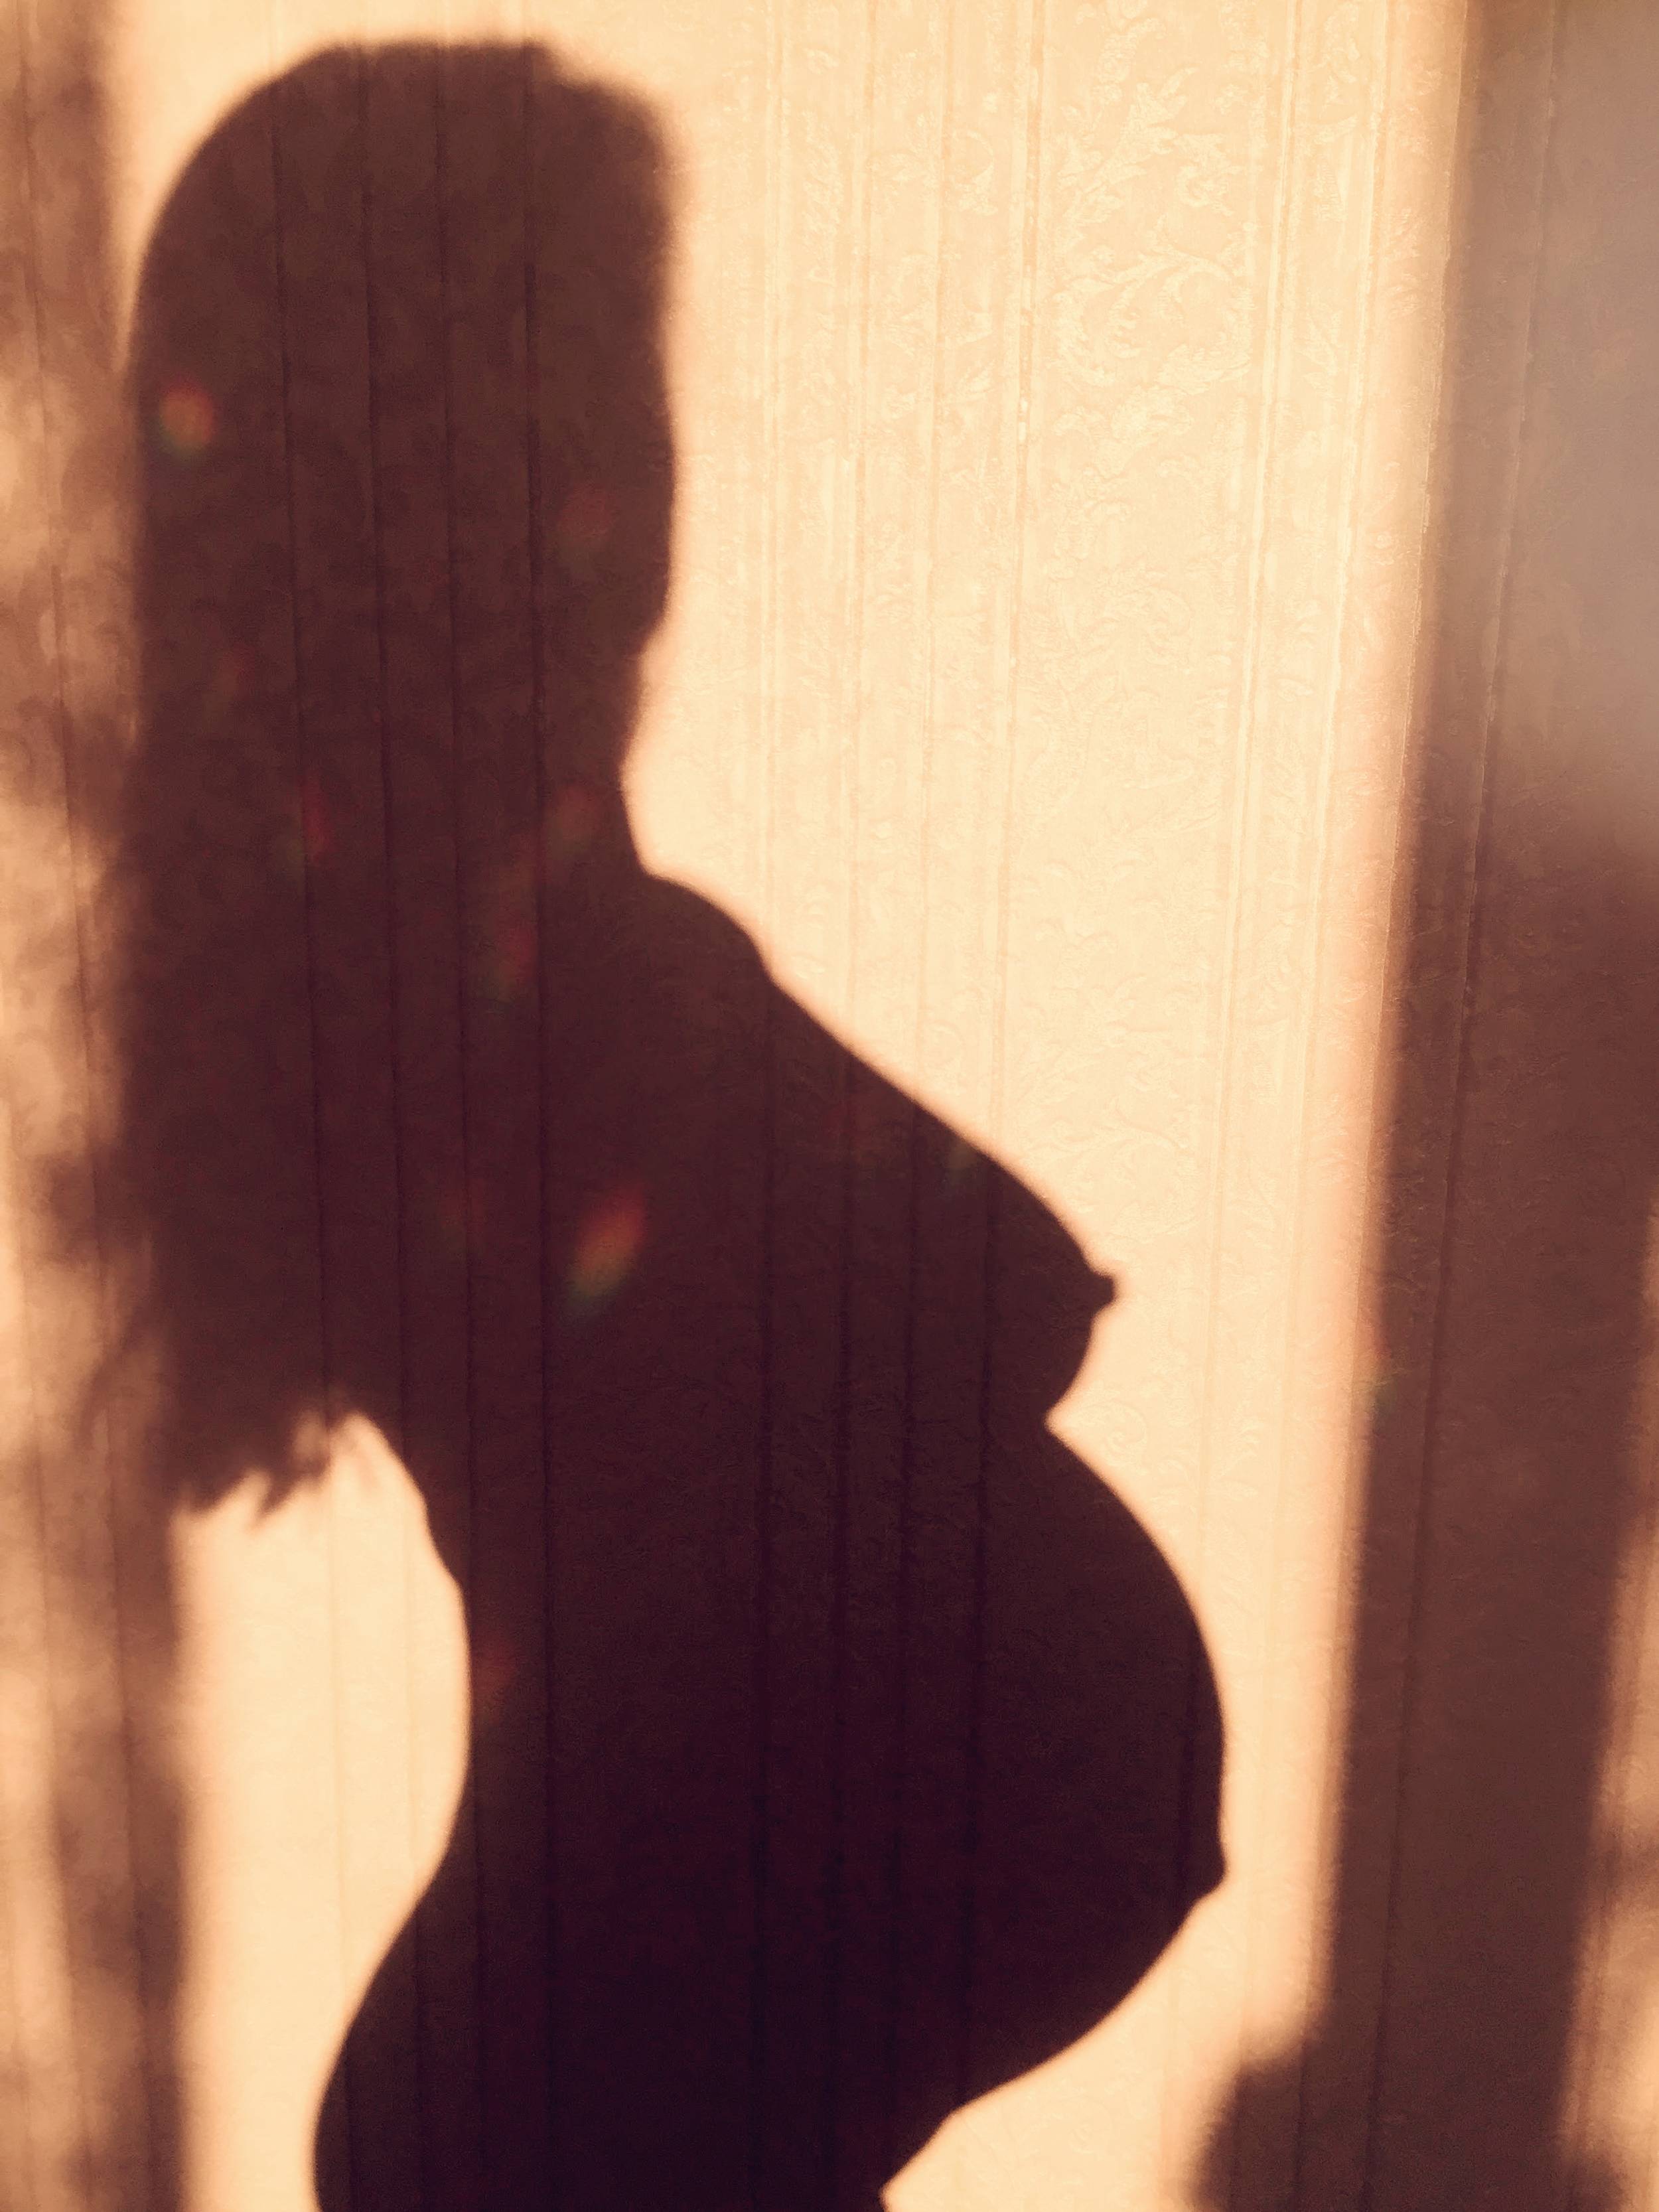 shadow-of-pregnant-girl-on-the-wall-in-sunlight-s-2021-08-29-20-12-44-utc_LQO7UGvja.jpg